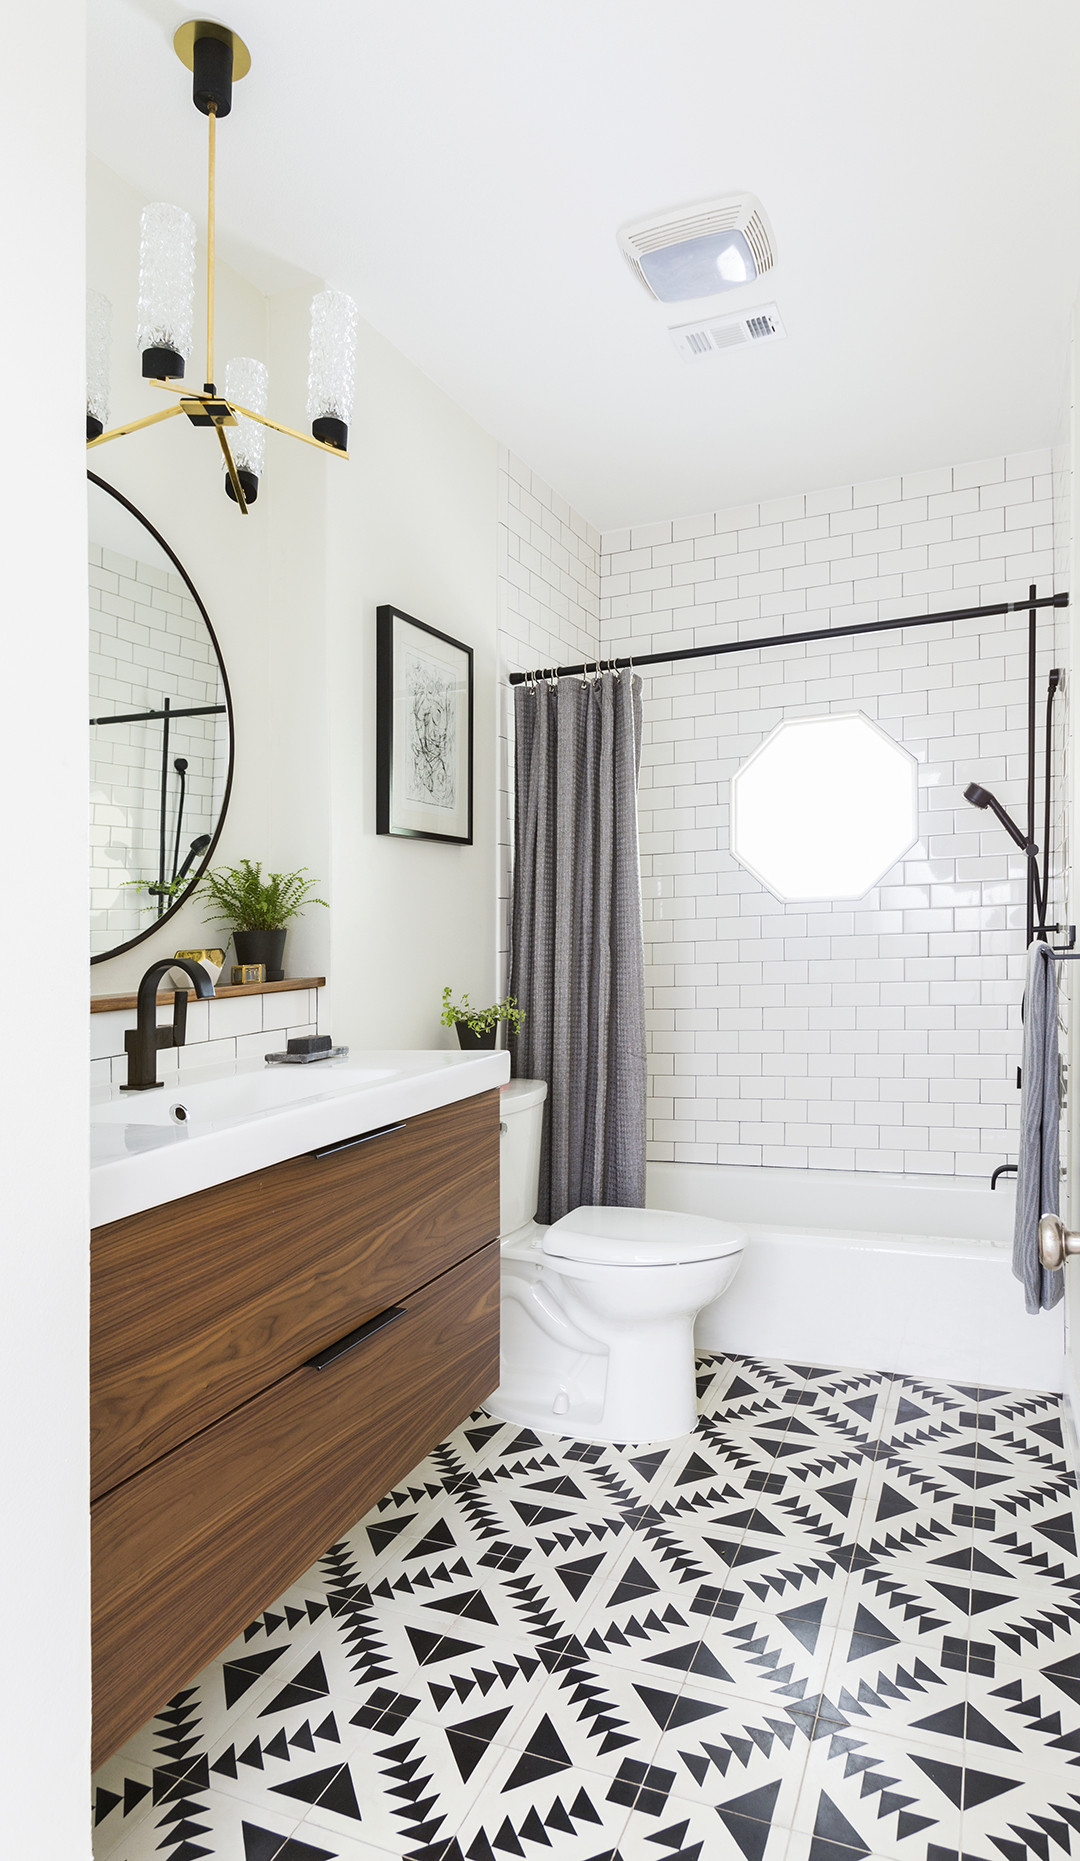 Geometric Bathroom Tiles
 Ways to Use Tile in Your Bathroom